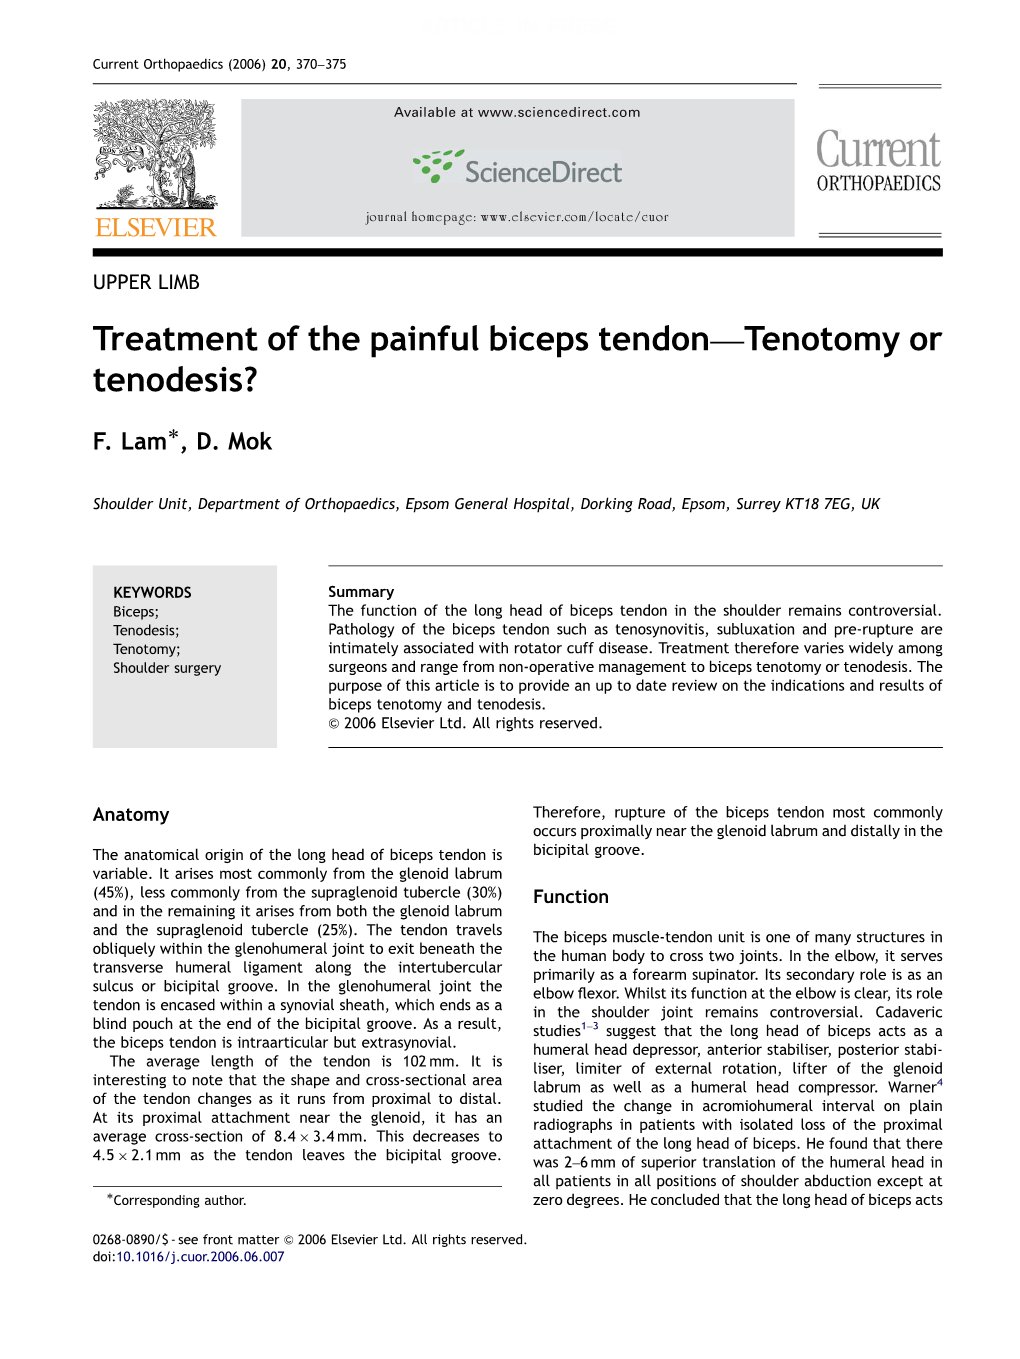 Treatment of the Painful Biceps Tendon—Tenotomy Or Tenodesis?